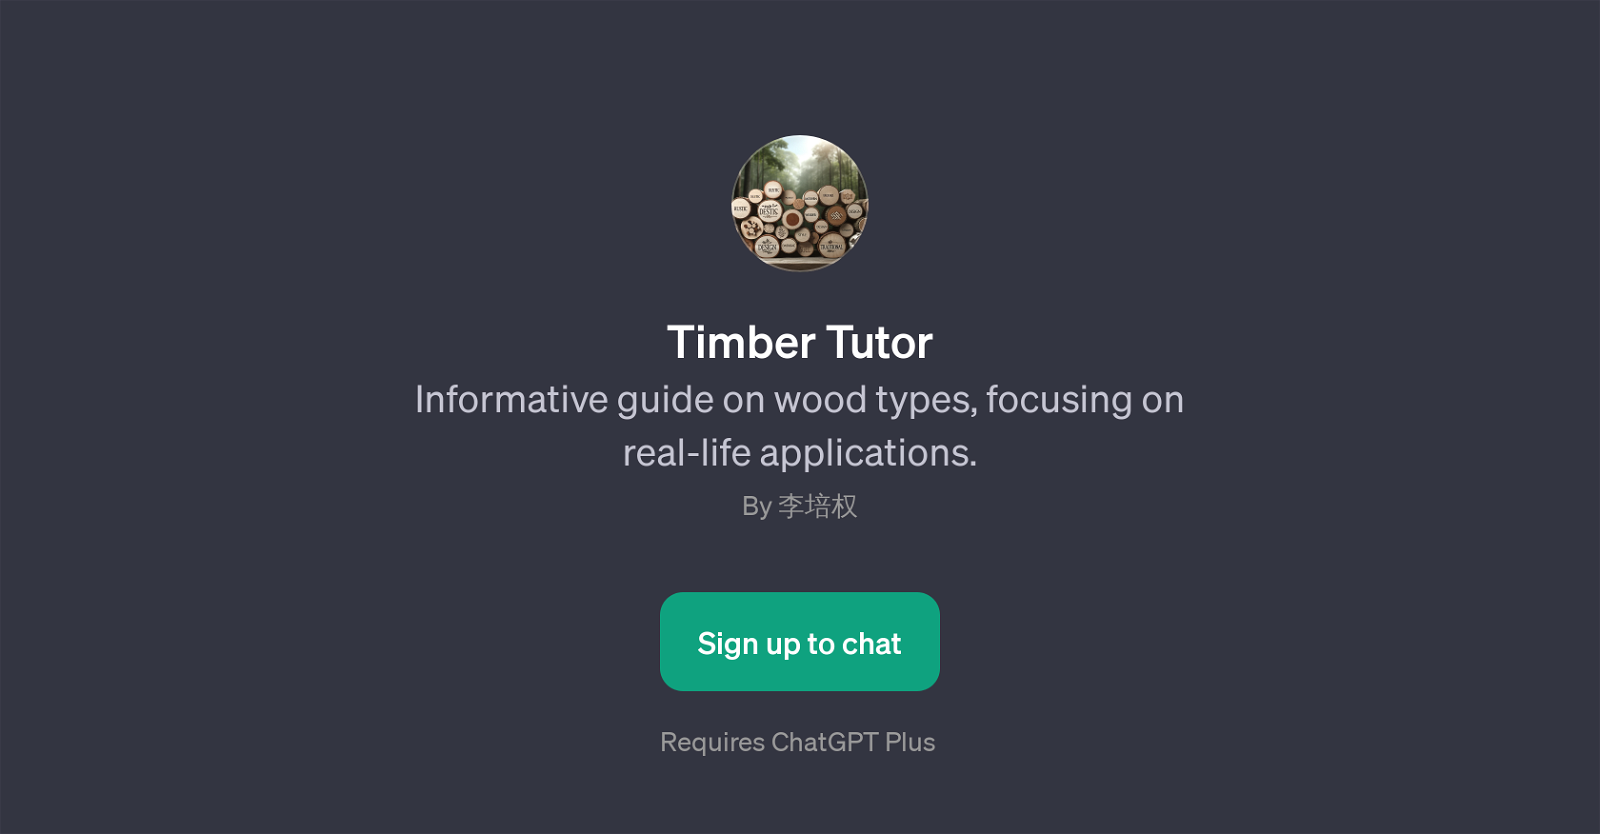 Timber Tutor website